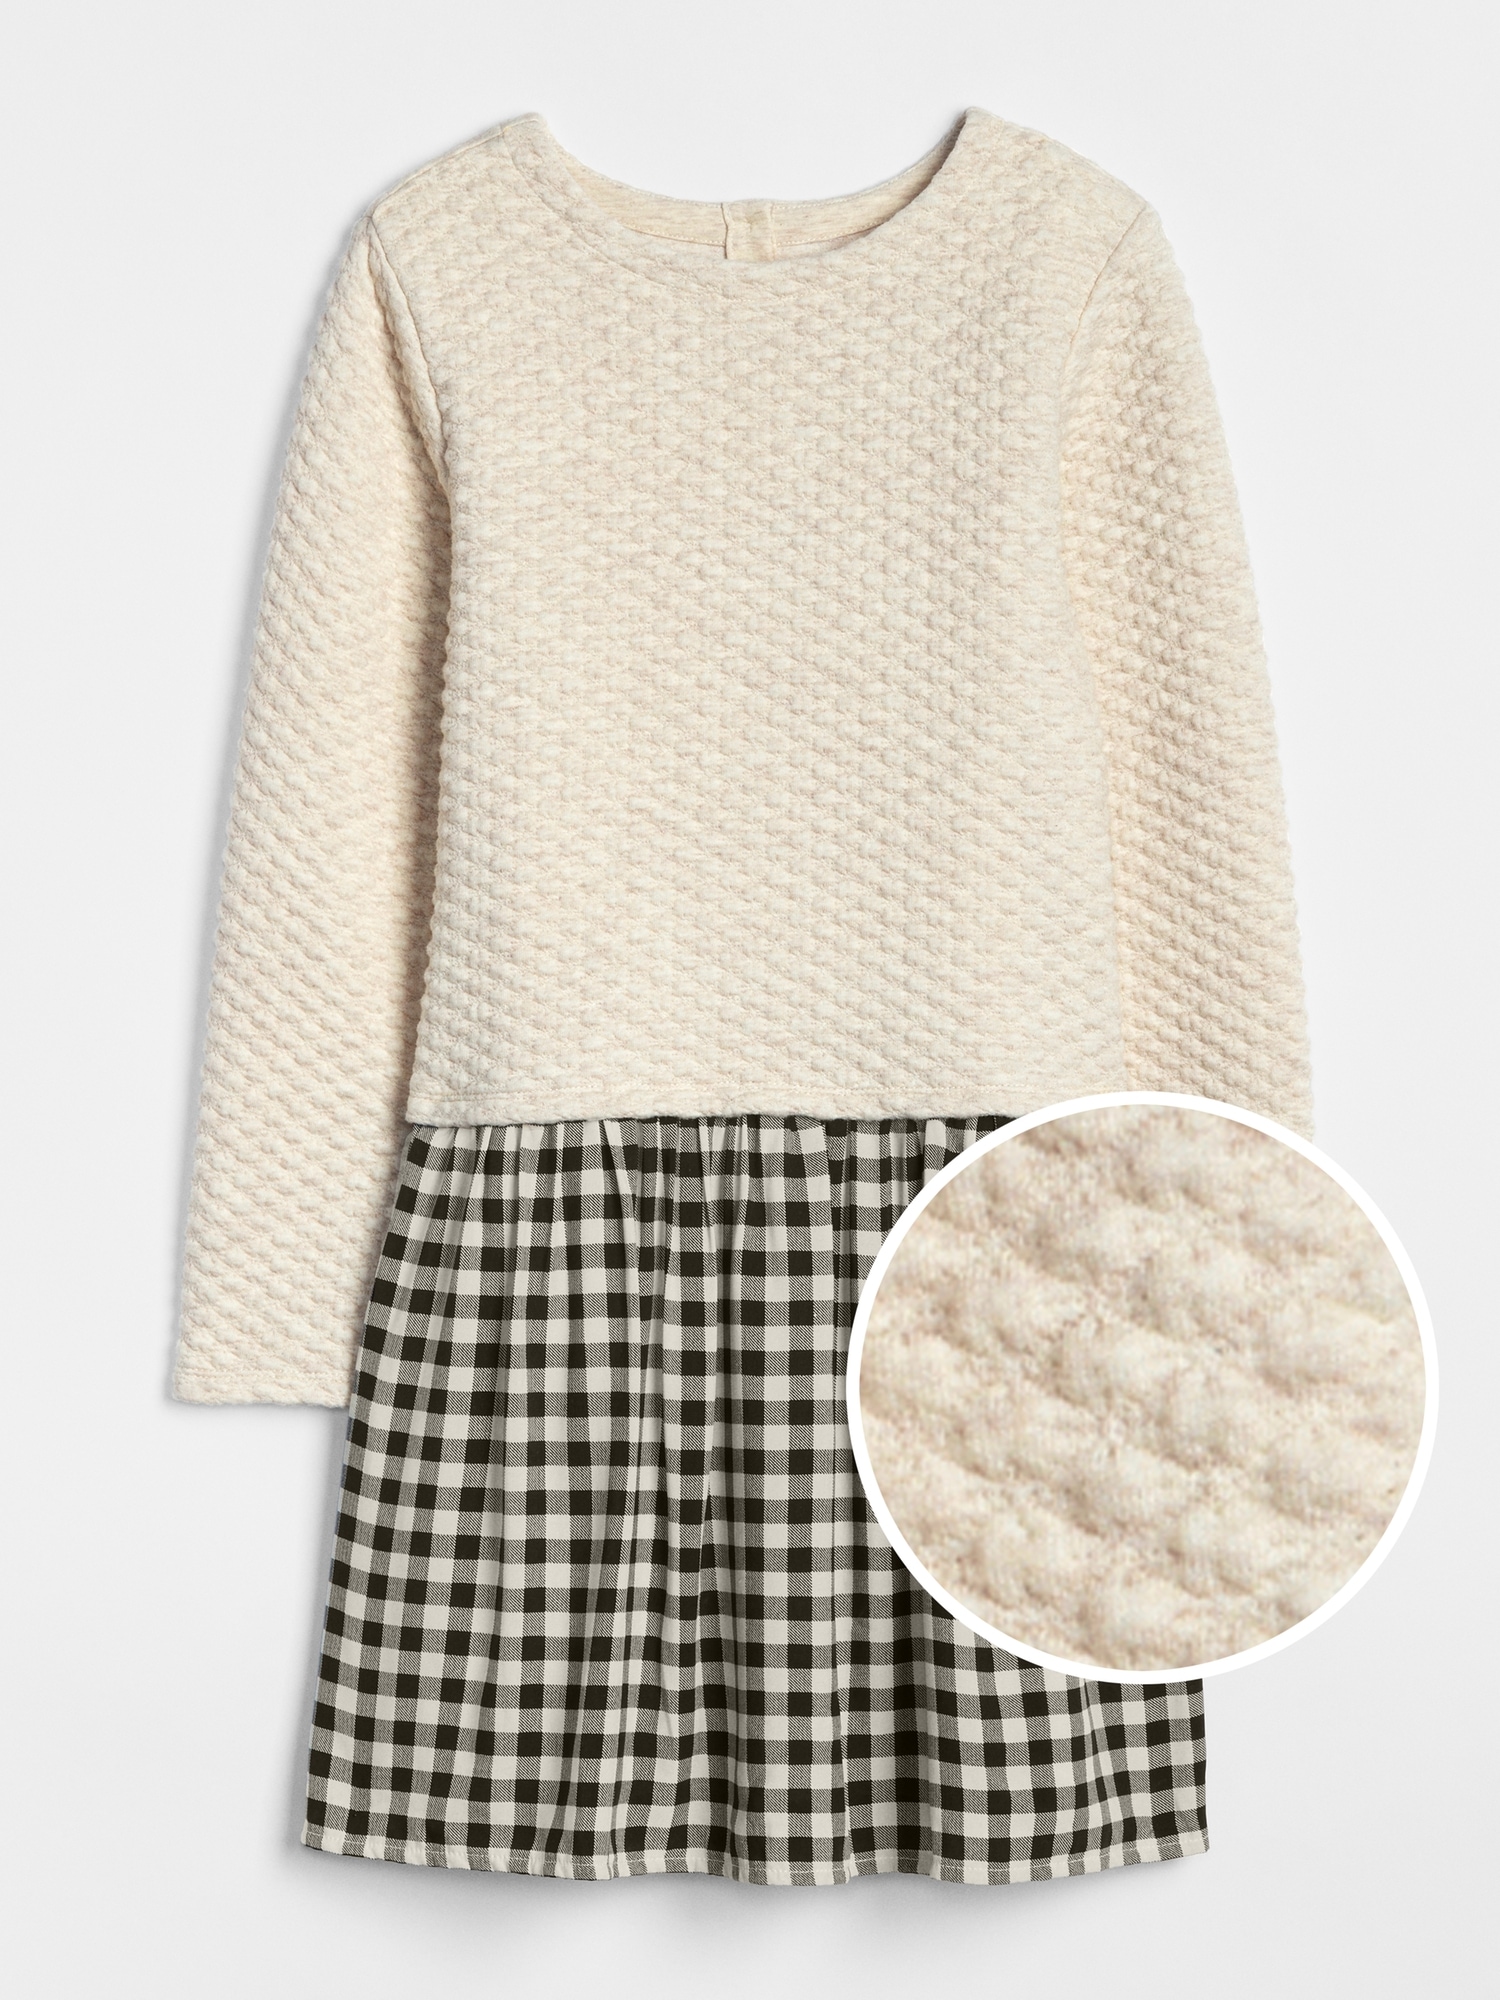 Mix-Fabric Sweater Dress | Gap